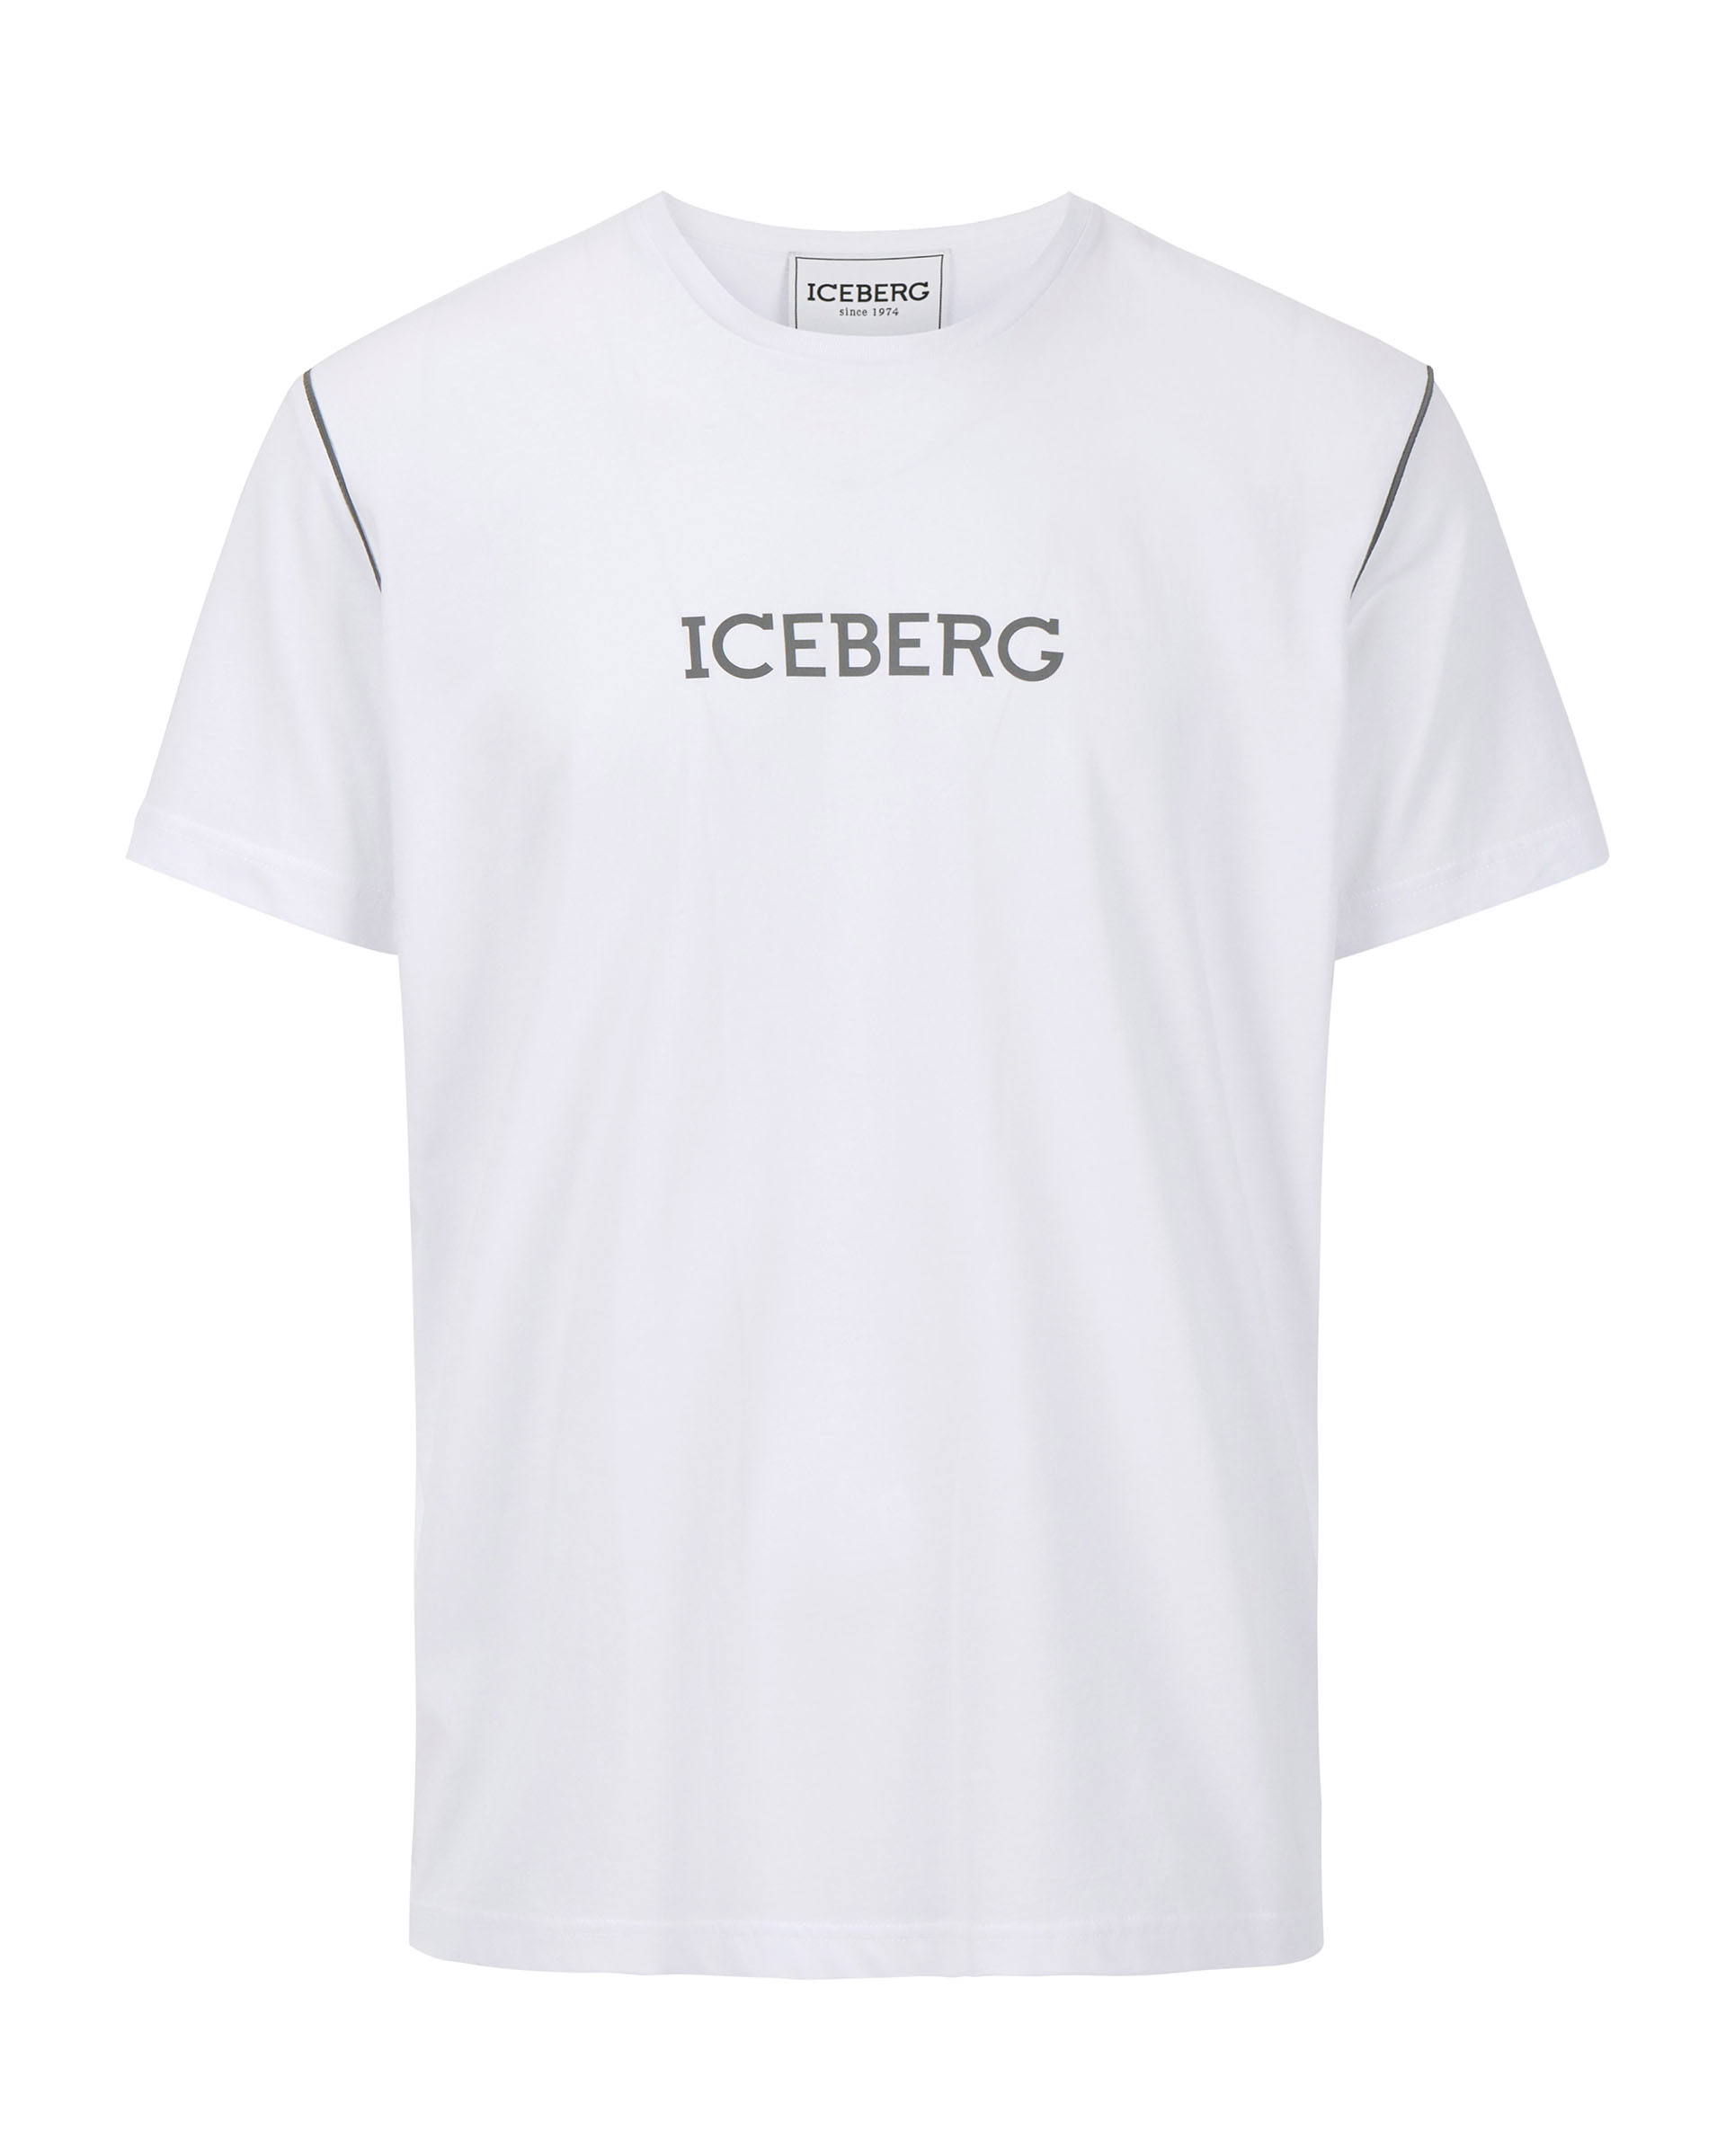 White Iceberg T-shirt with gray logo